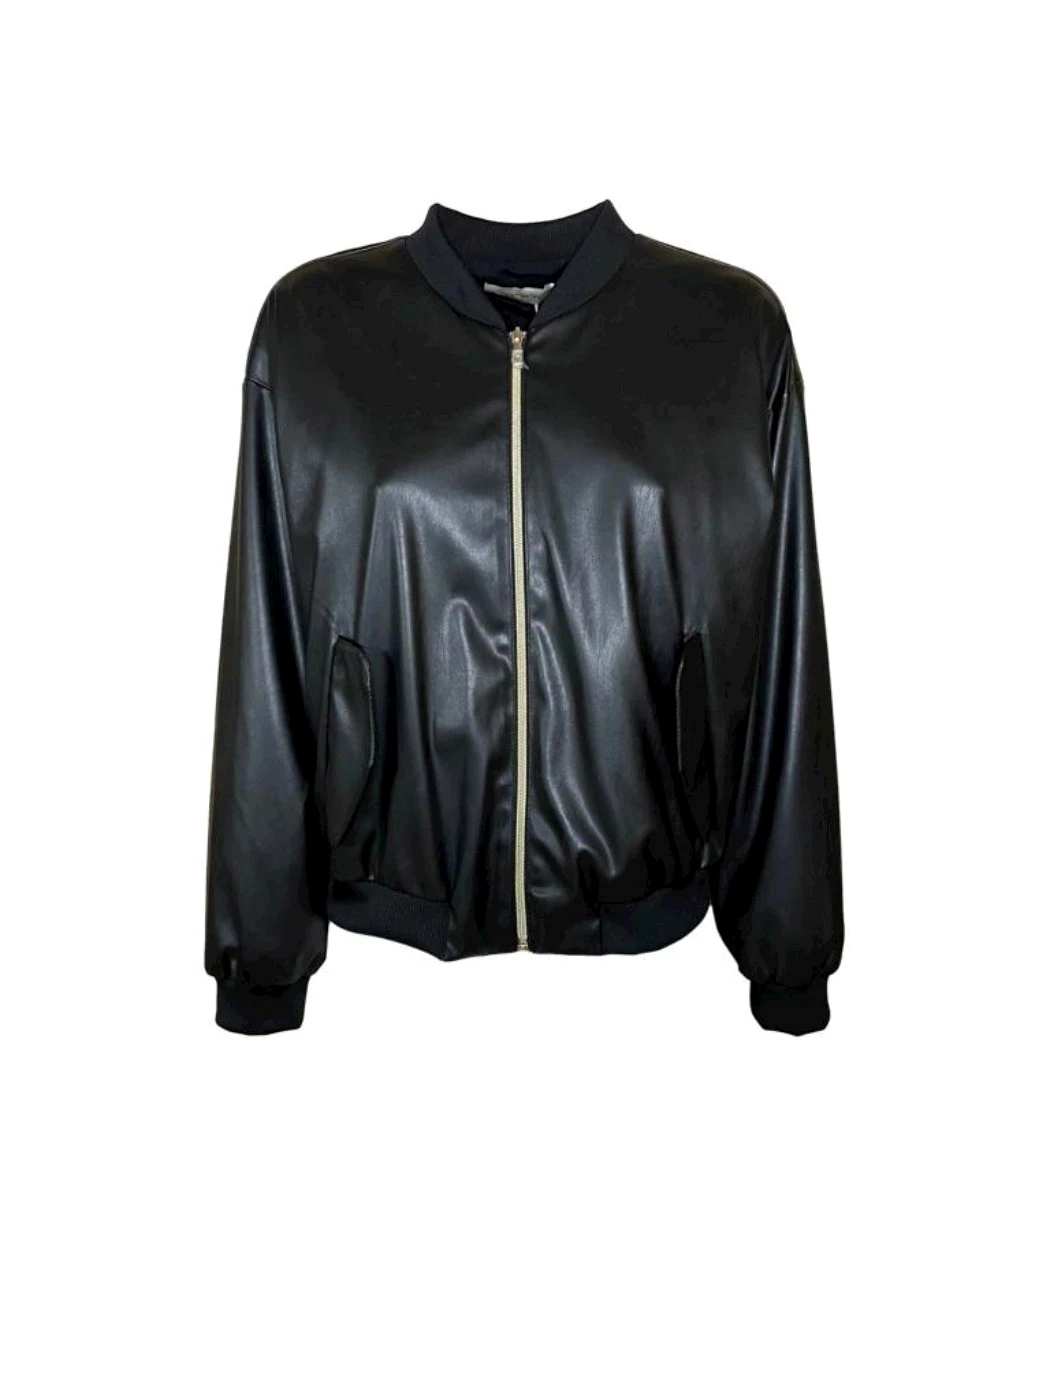 IBlues Leather Jacket